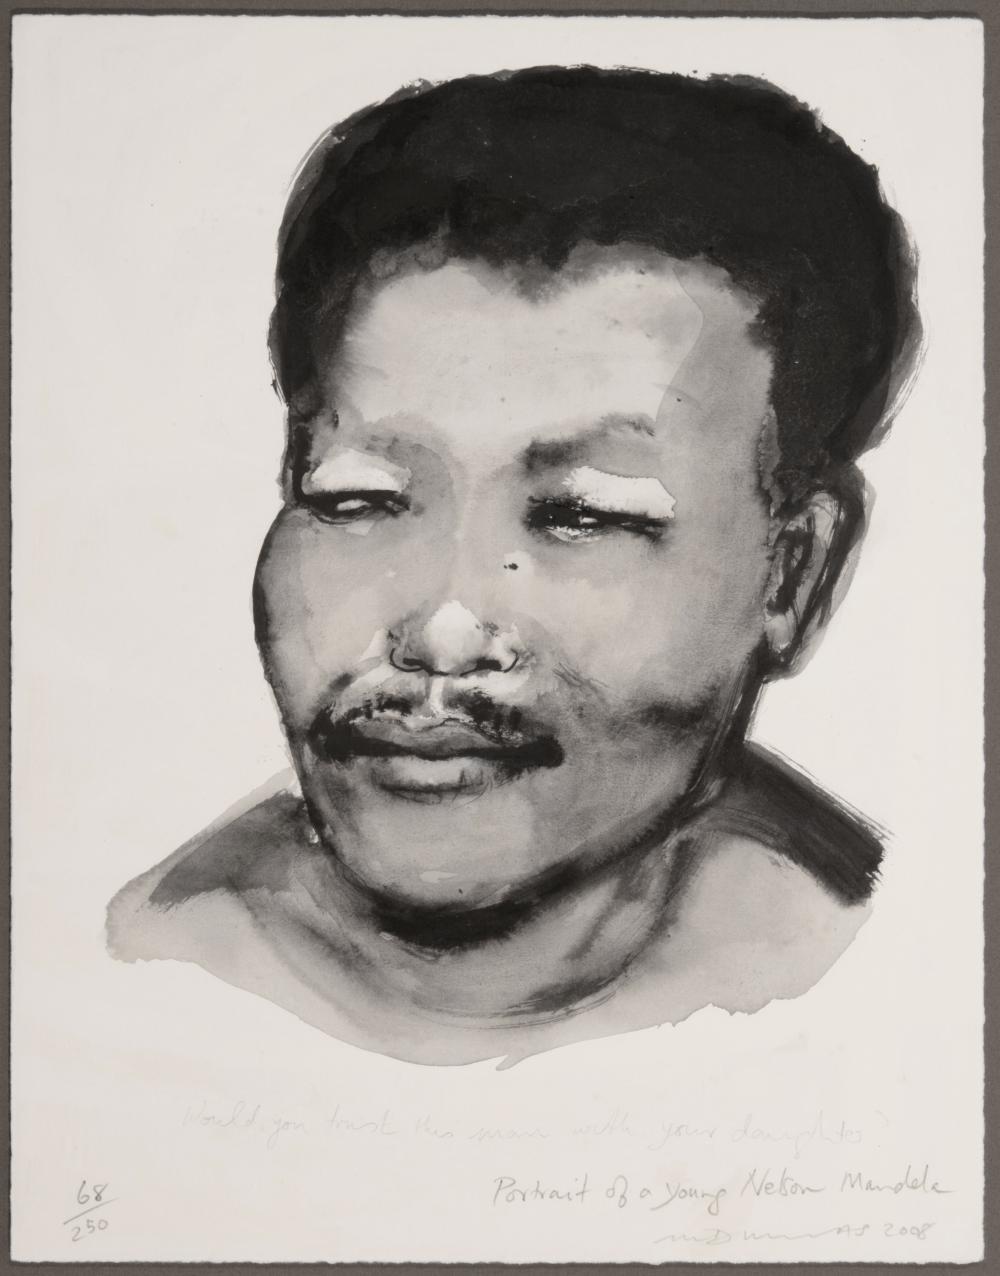 Portrait of a young Nelson Mandela